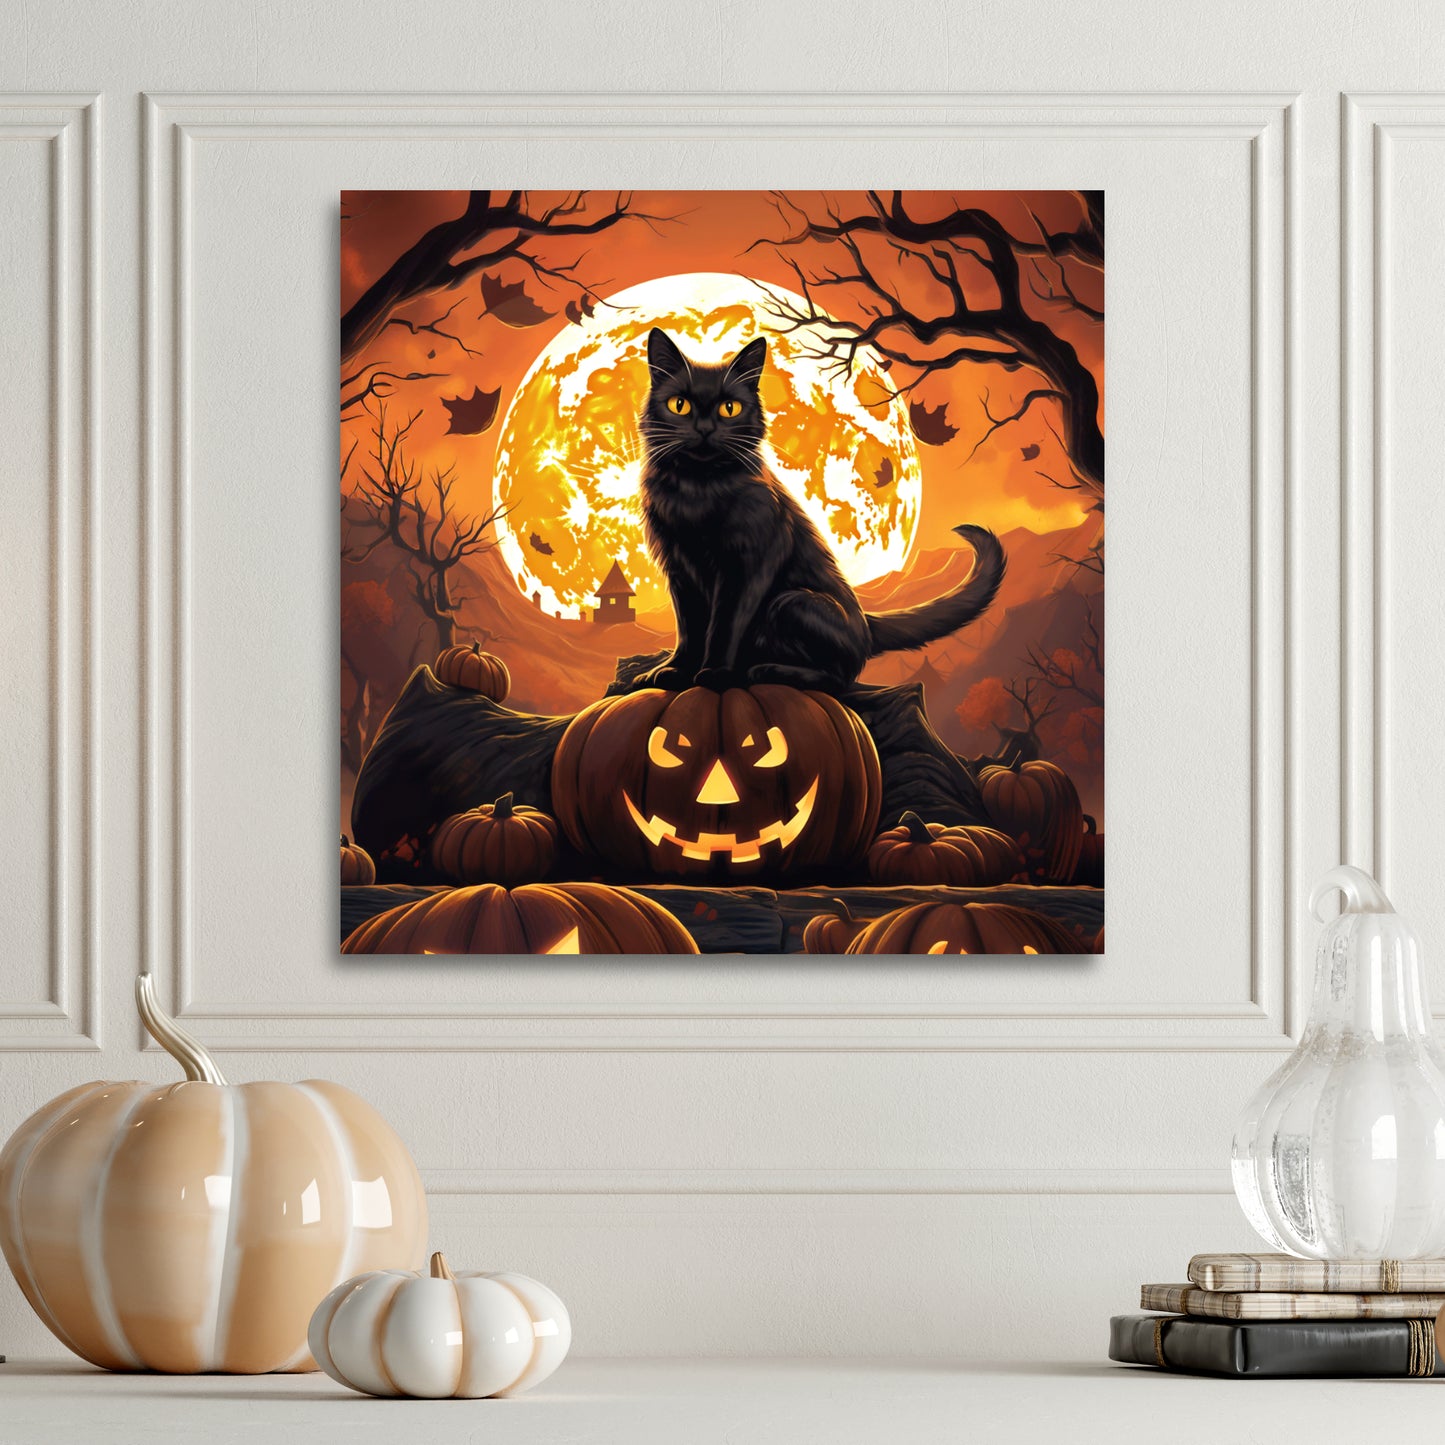 Halloween black cat aesthetic wall decor